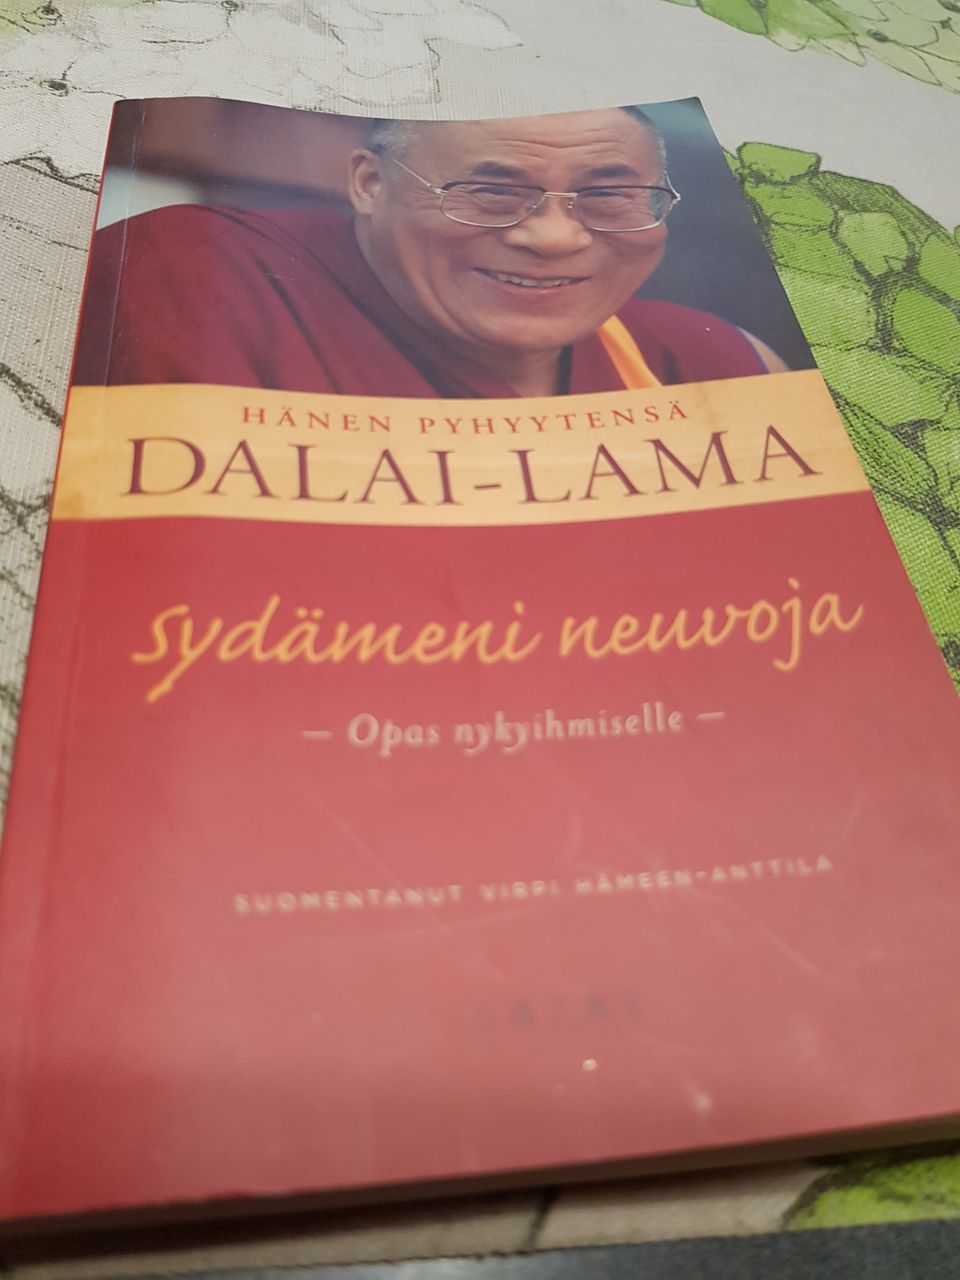 Dalai - Lama: Sydämeni neuvoja.